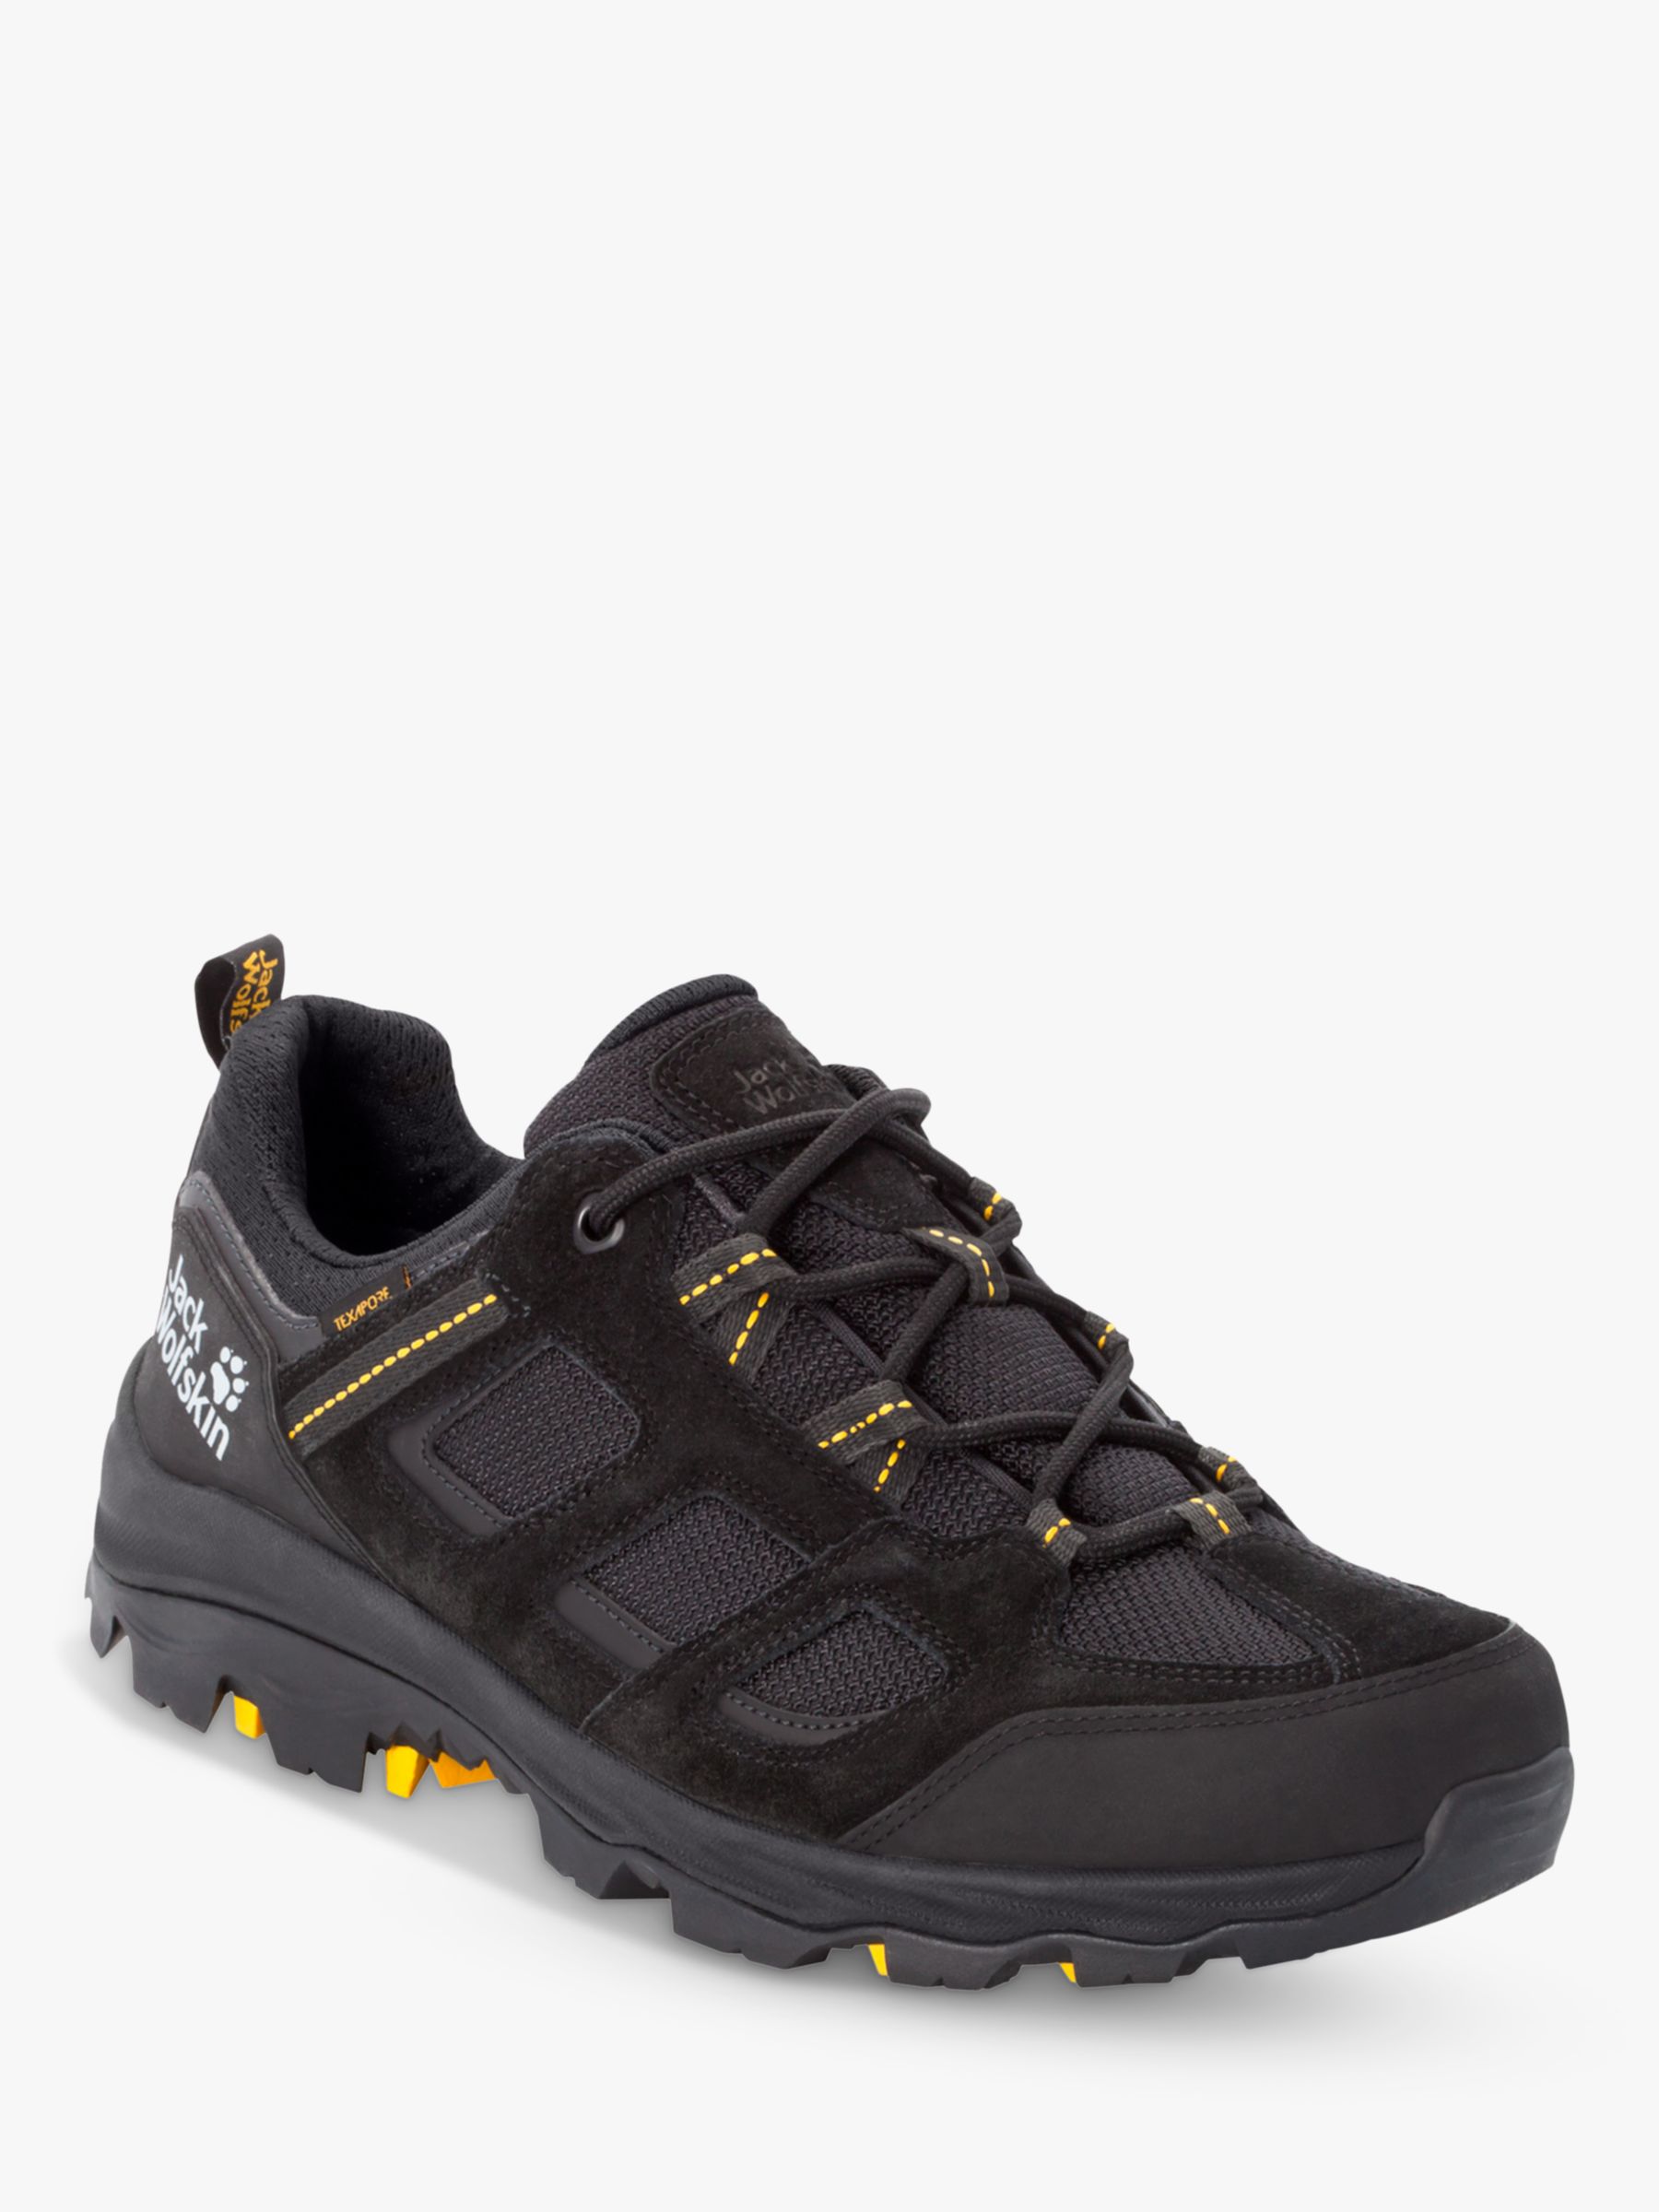 Jack Wolfskin Vojo 3 Texapore Men's Waterproof Walking Shoes, Black / Burly Yellow, 7